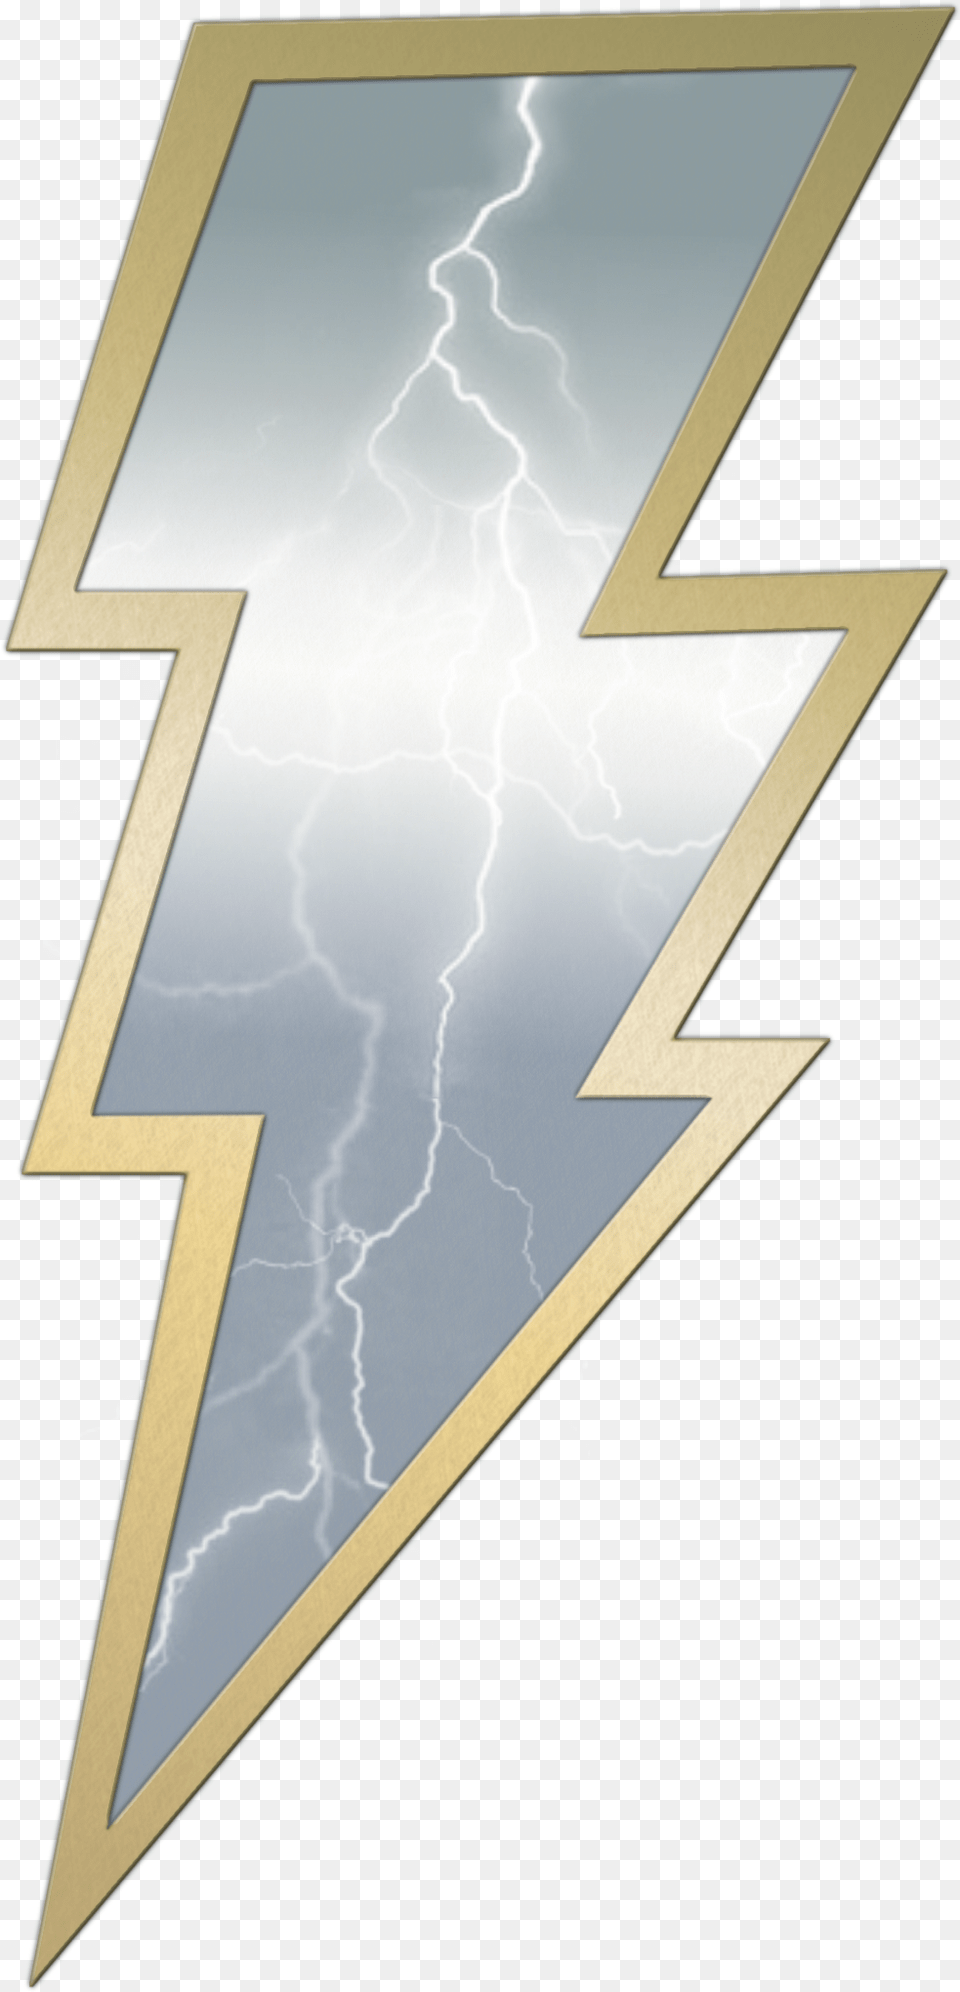 Dc Comics Universe U0026 October 2019 Solicitations Spoilers Black Adam Logo, Nature, Outdoors, Storm, Thunderstorm Png Image